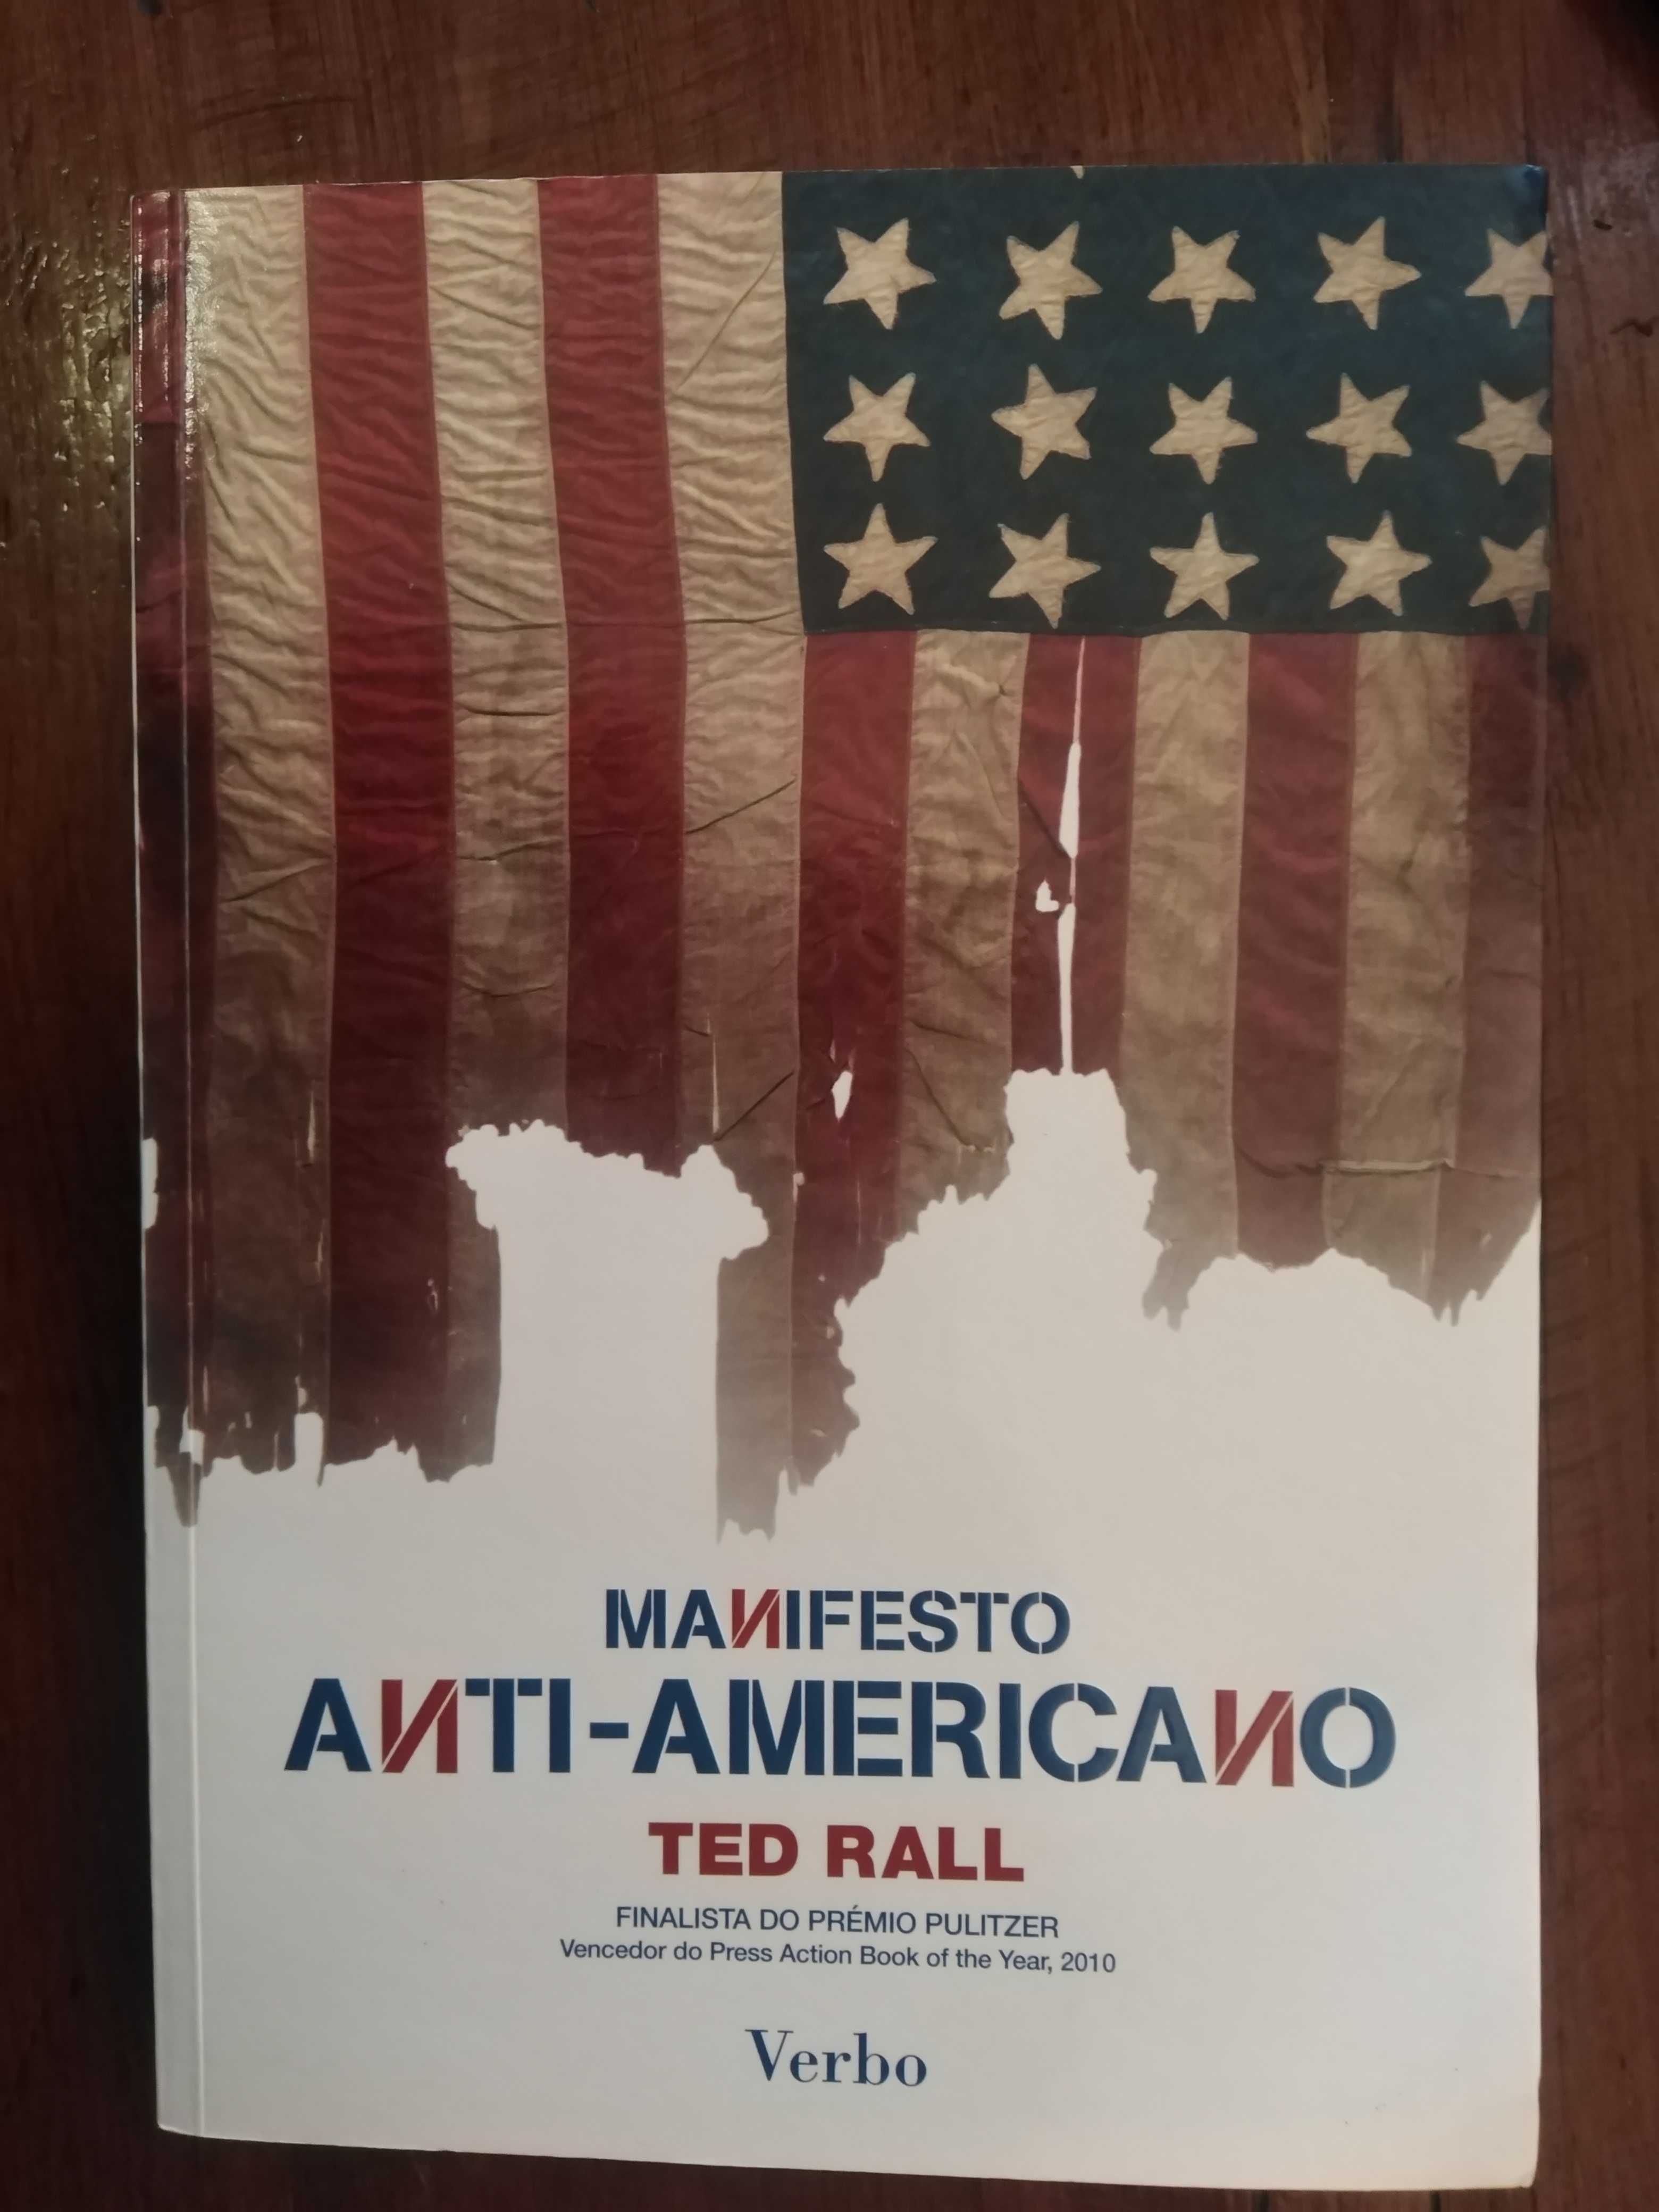 Ted Rall - Manifesto anti-americano